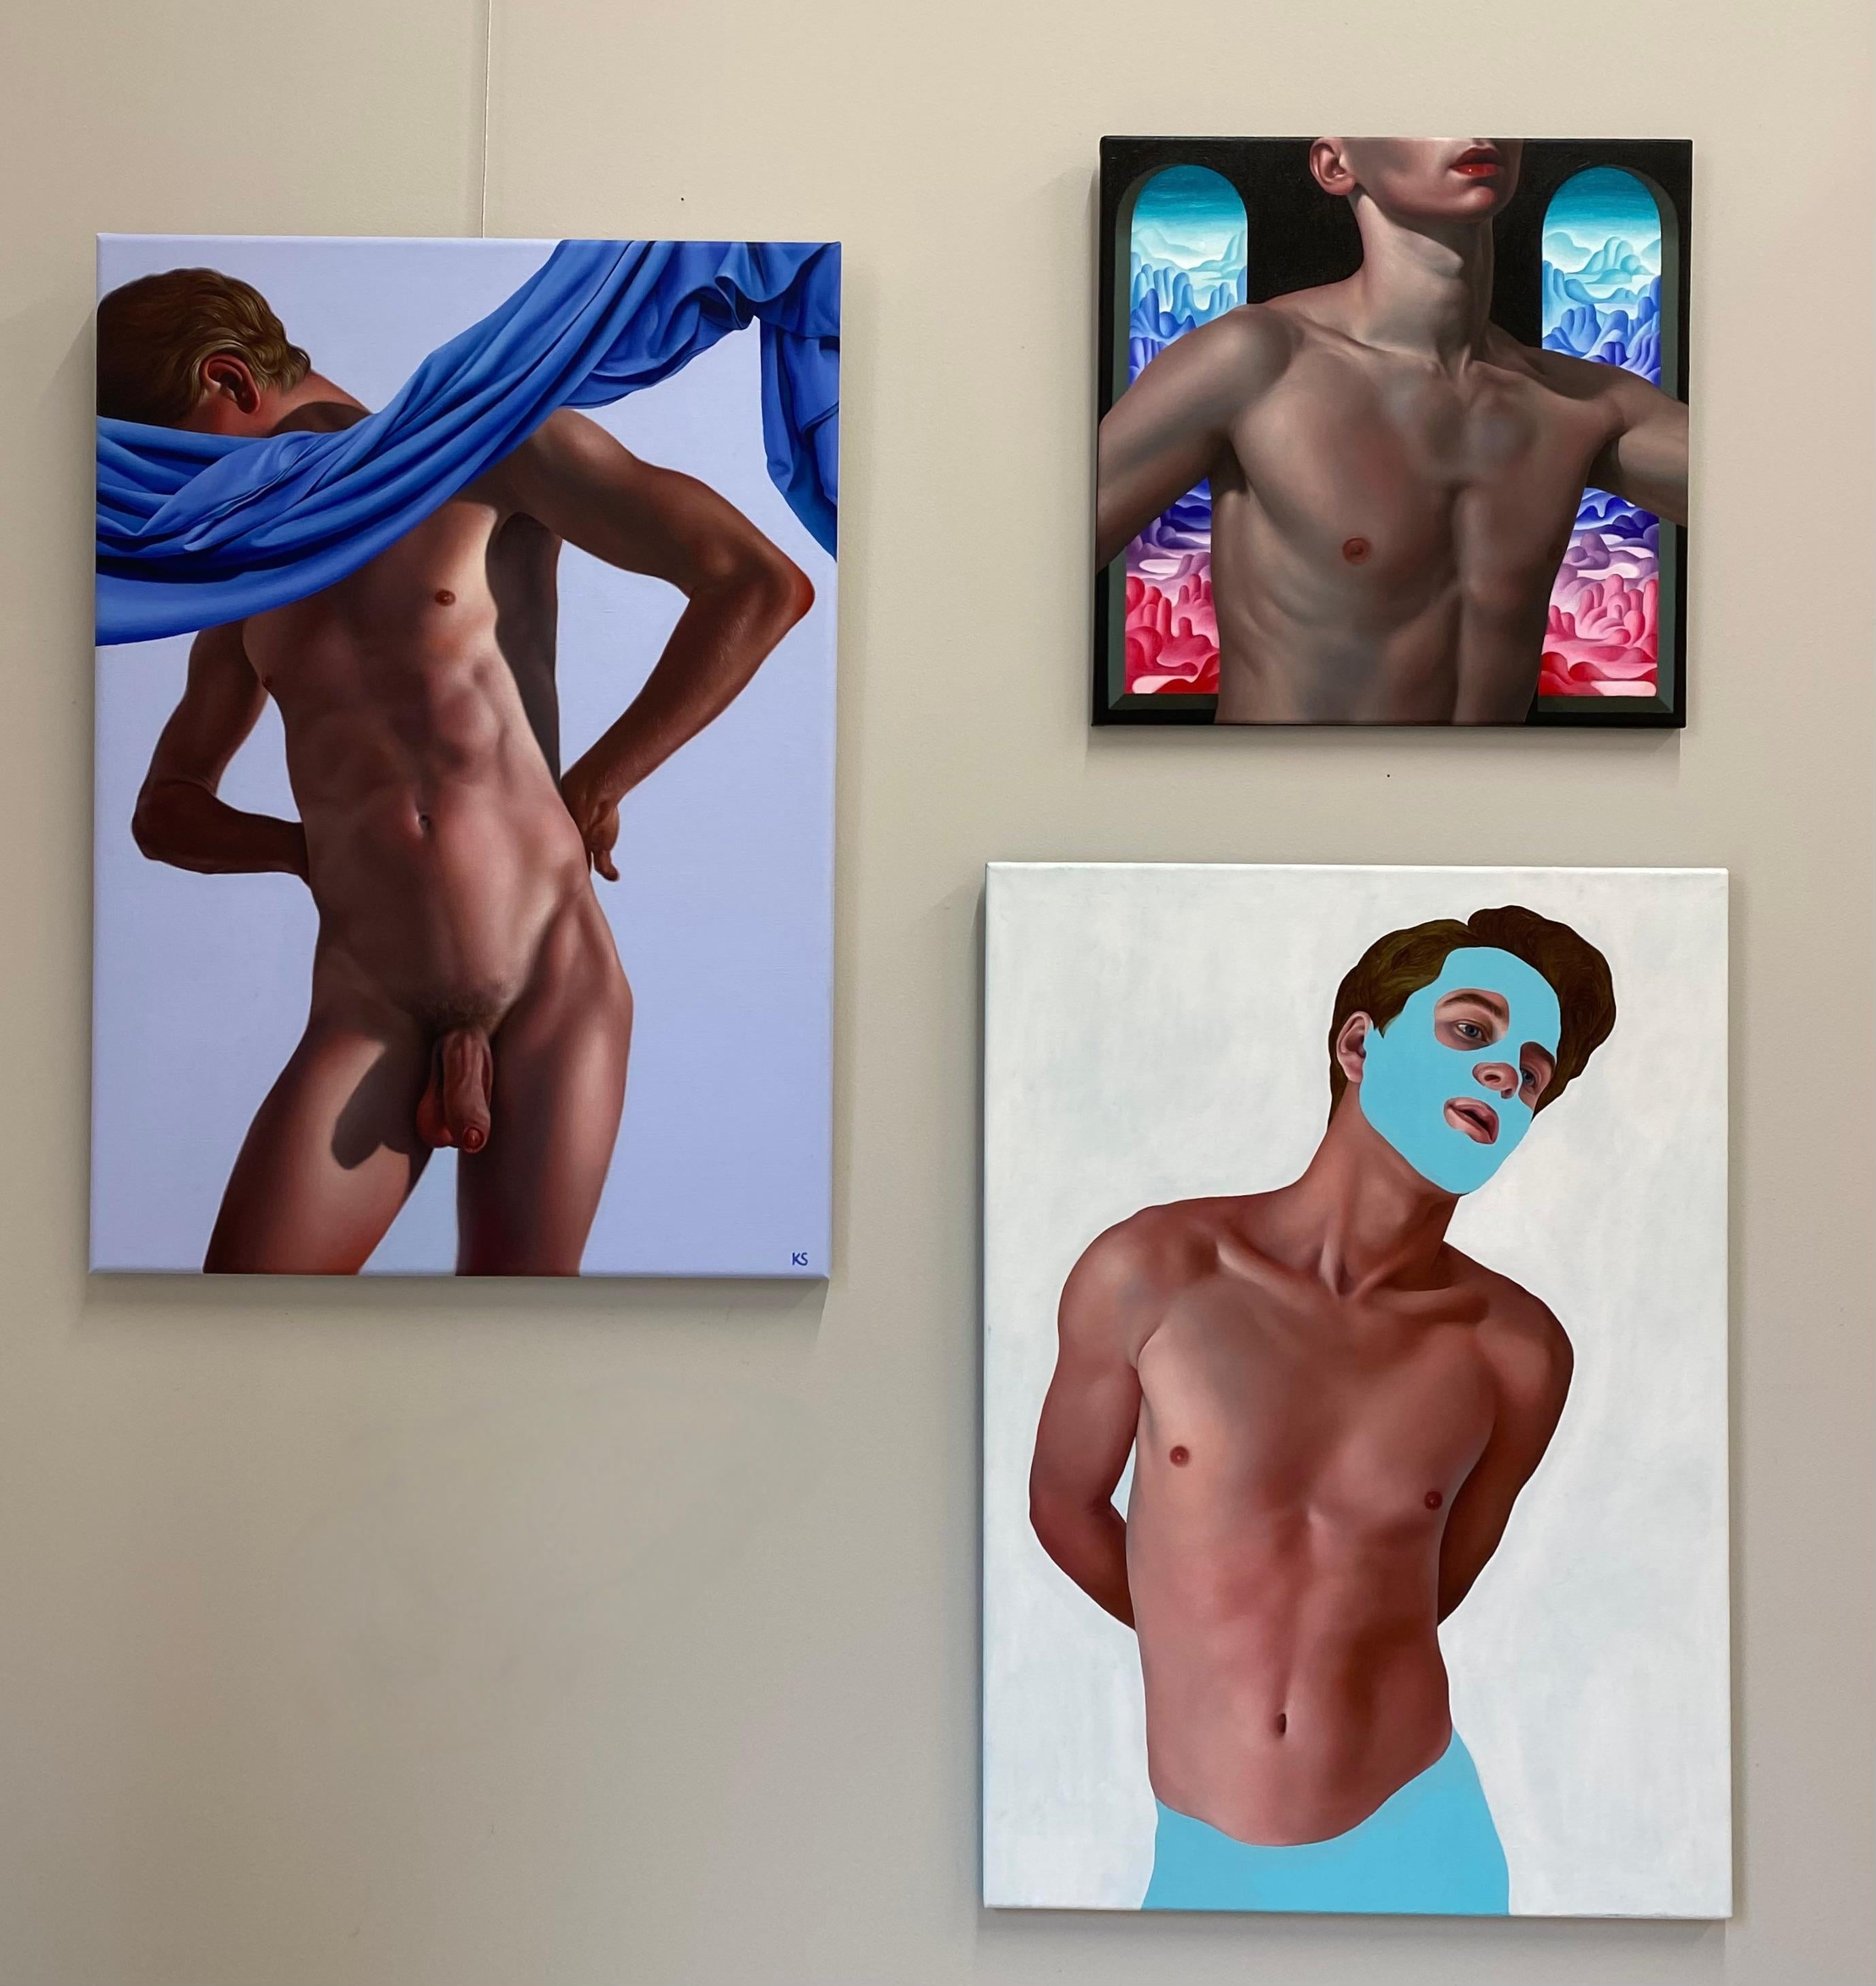 Blue Boy- 21 Century Contemporary Modern Painting of a Young Nude Boy - Gray Portrait Painting by Krzysztof Stępniewski